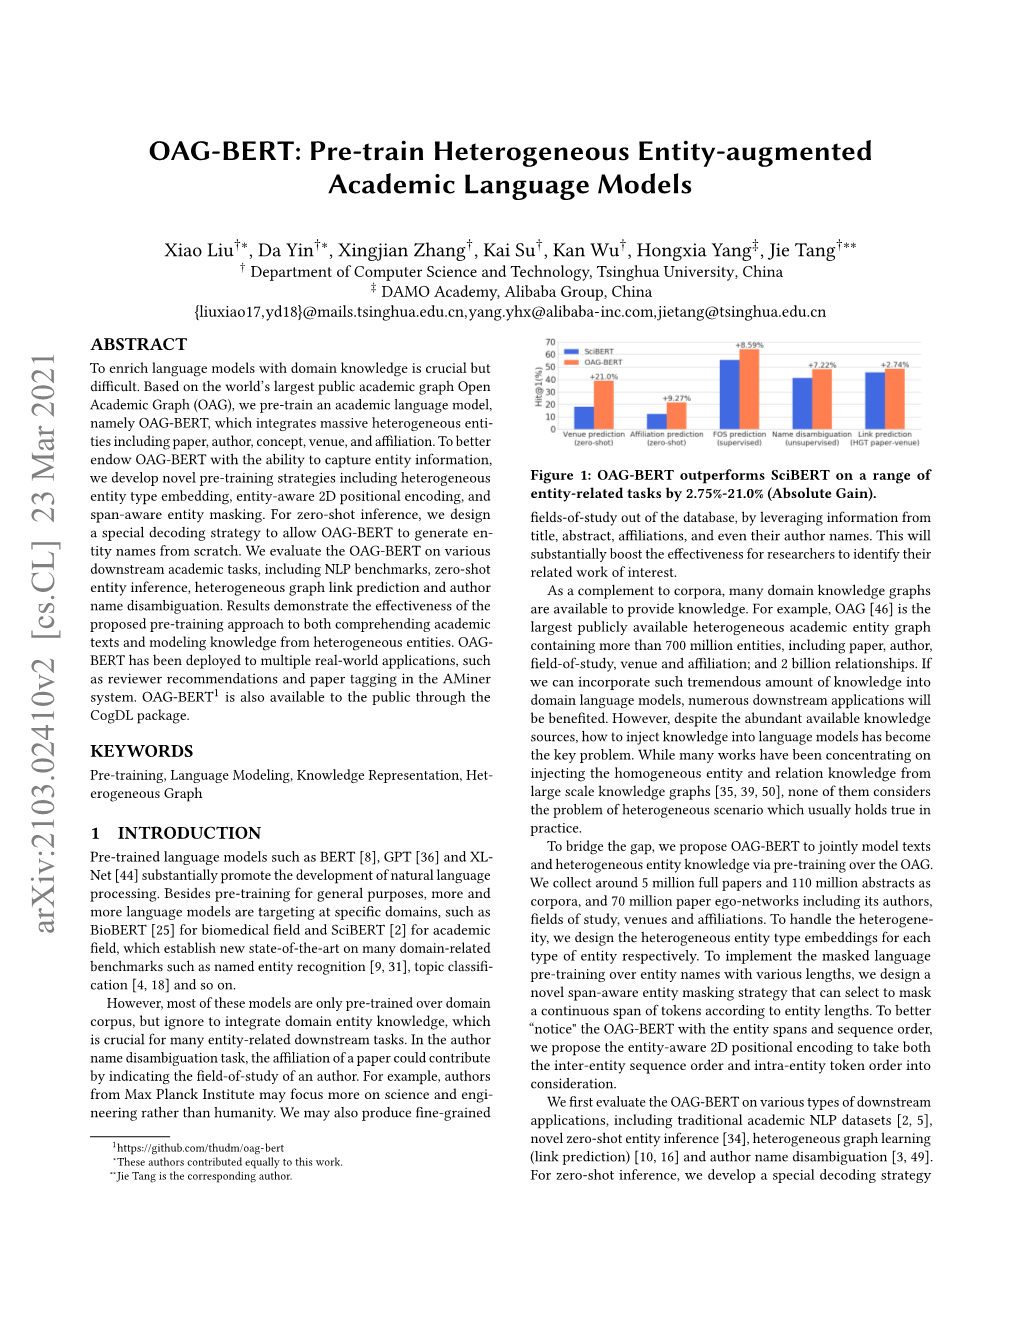 OAG-BERT: Pre-Train Heterogeneous Entity-Augmented Academic Language Models